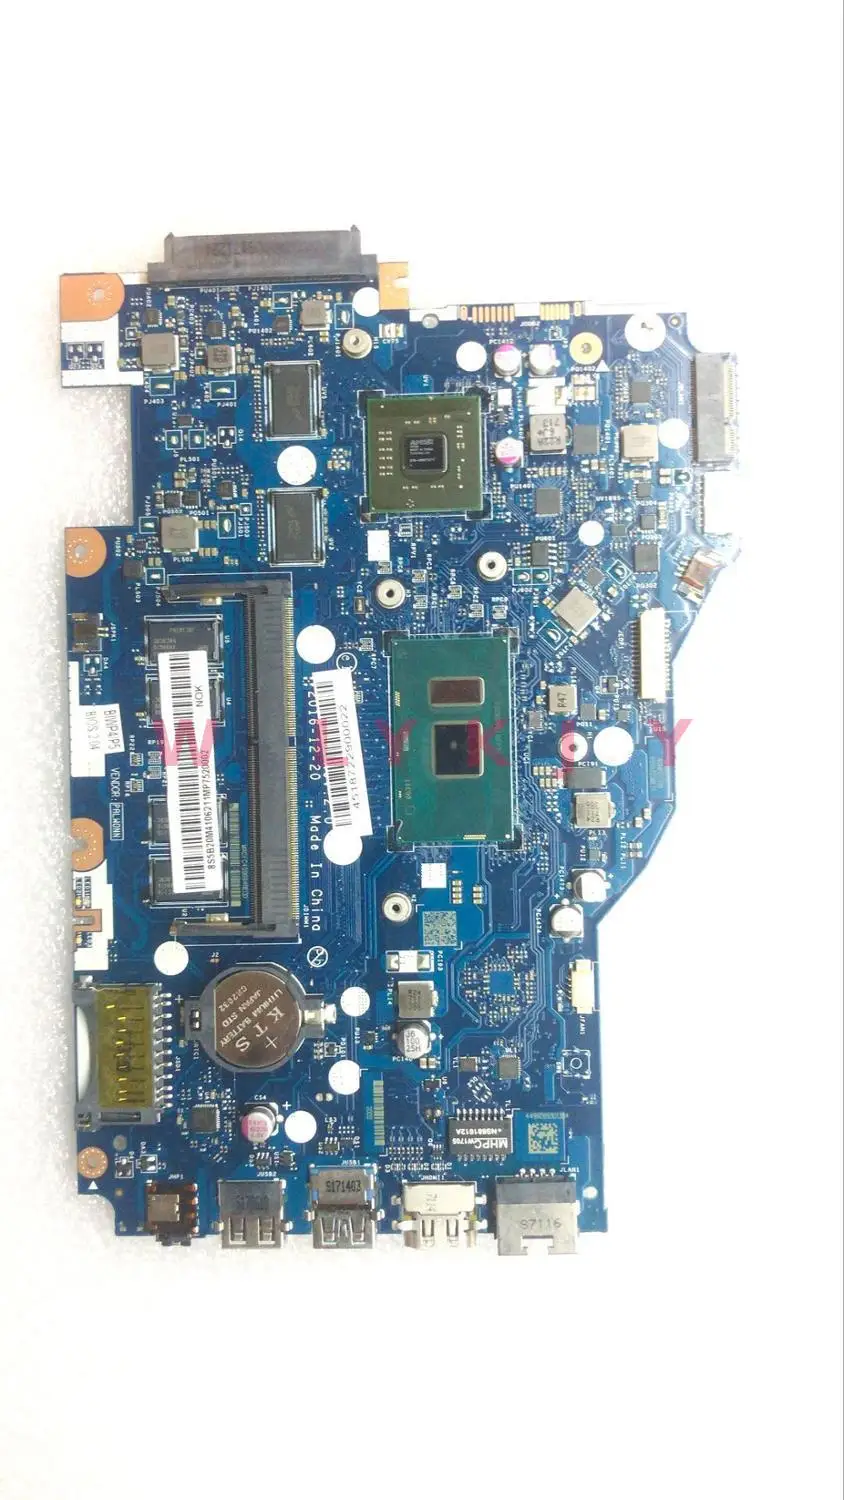 LA-D562P для Lenovo 110-15ISK 310-15ISK ноутбук материнская плата процессор i5 6200U 4G RAM R5 M430 2G GPU 100%